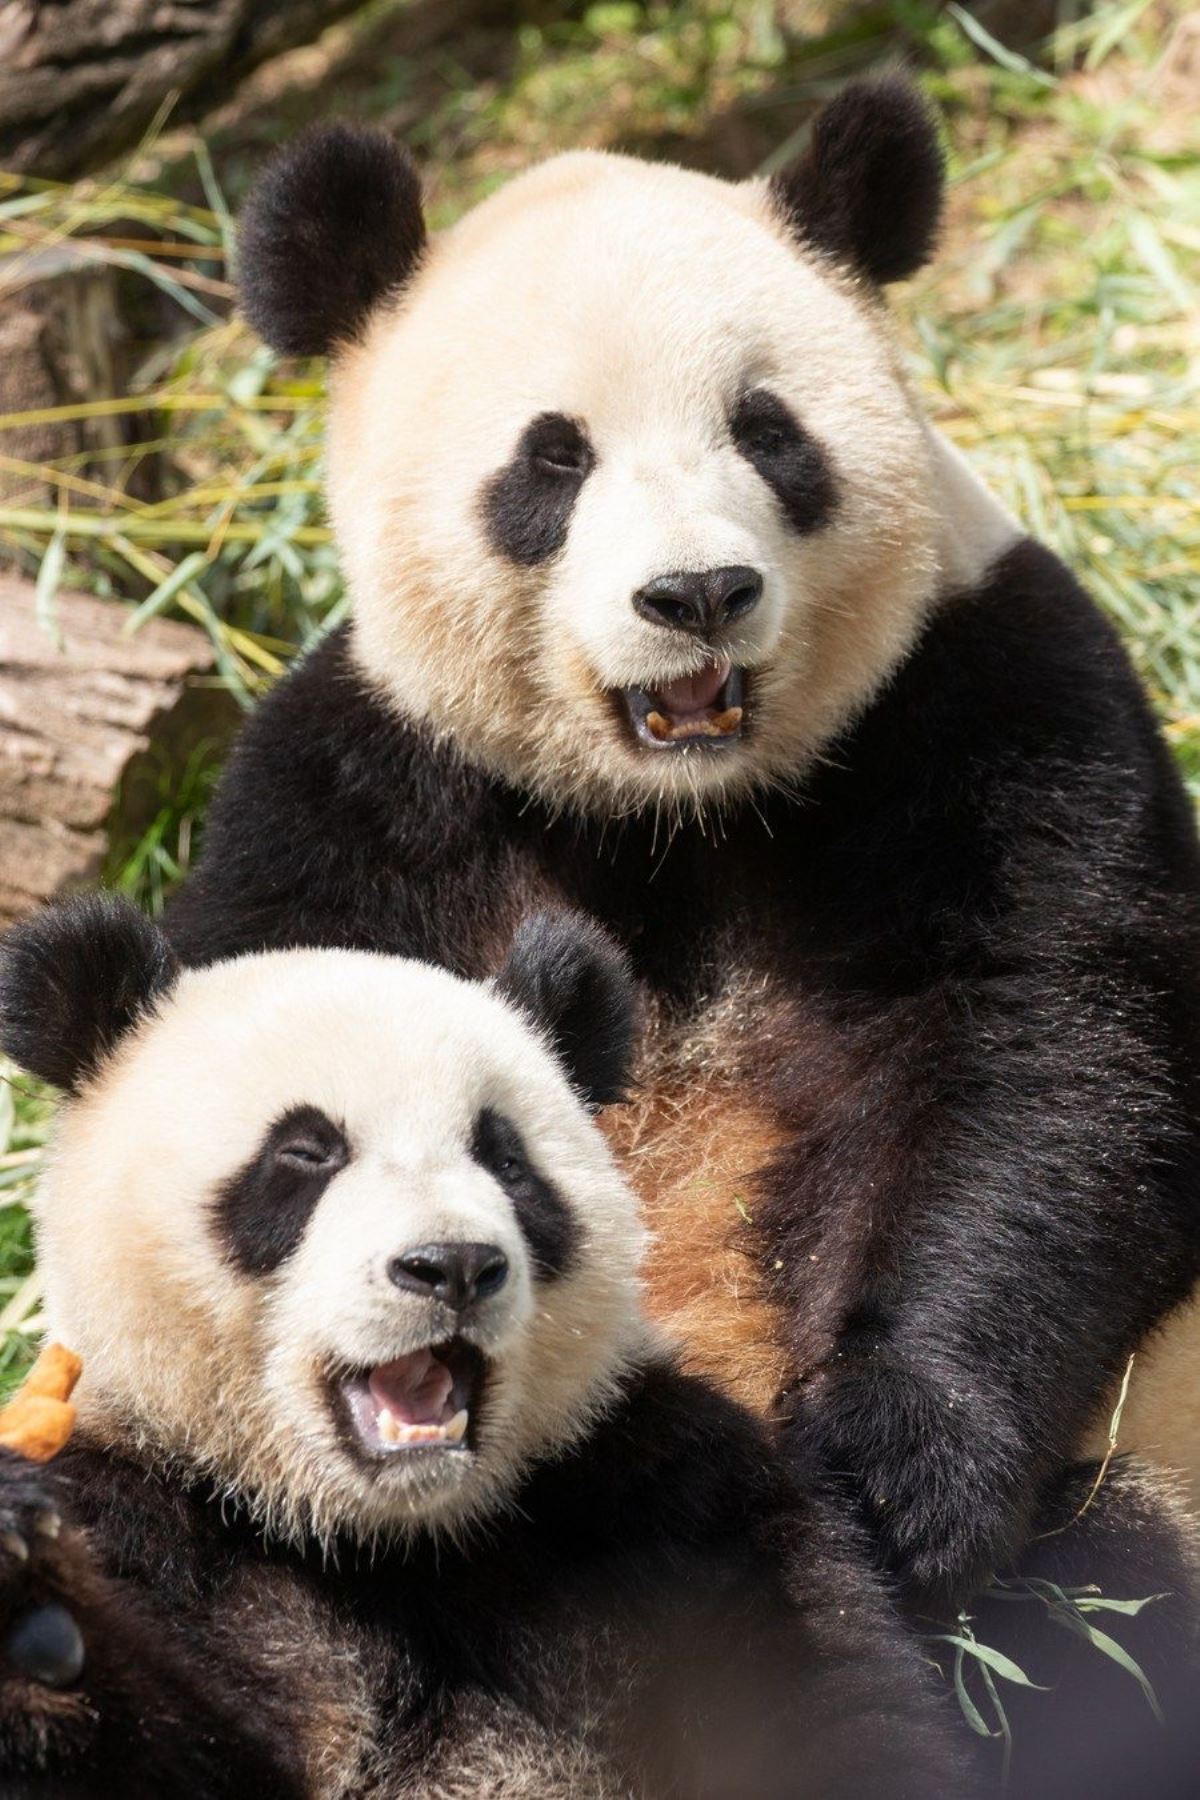 Dev panda Tian Bao, 2022'de Belçika'da kalabilecek